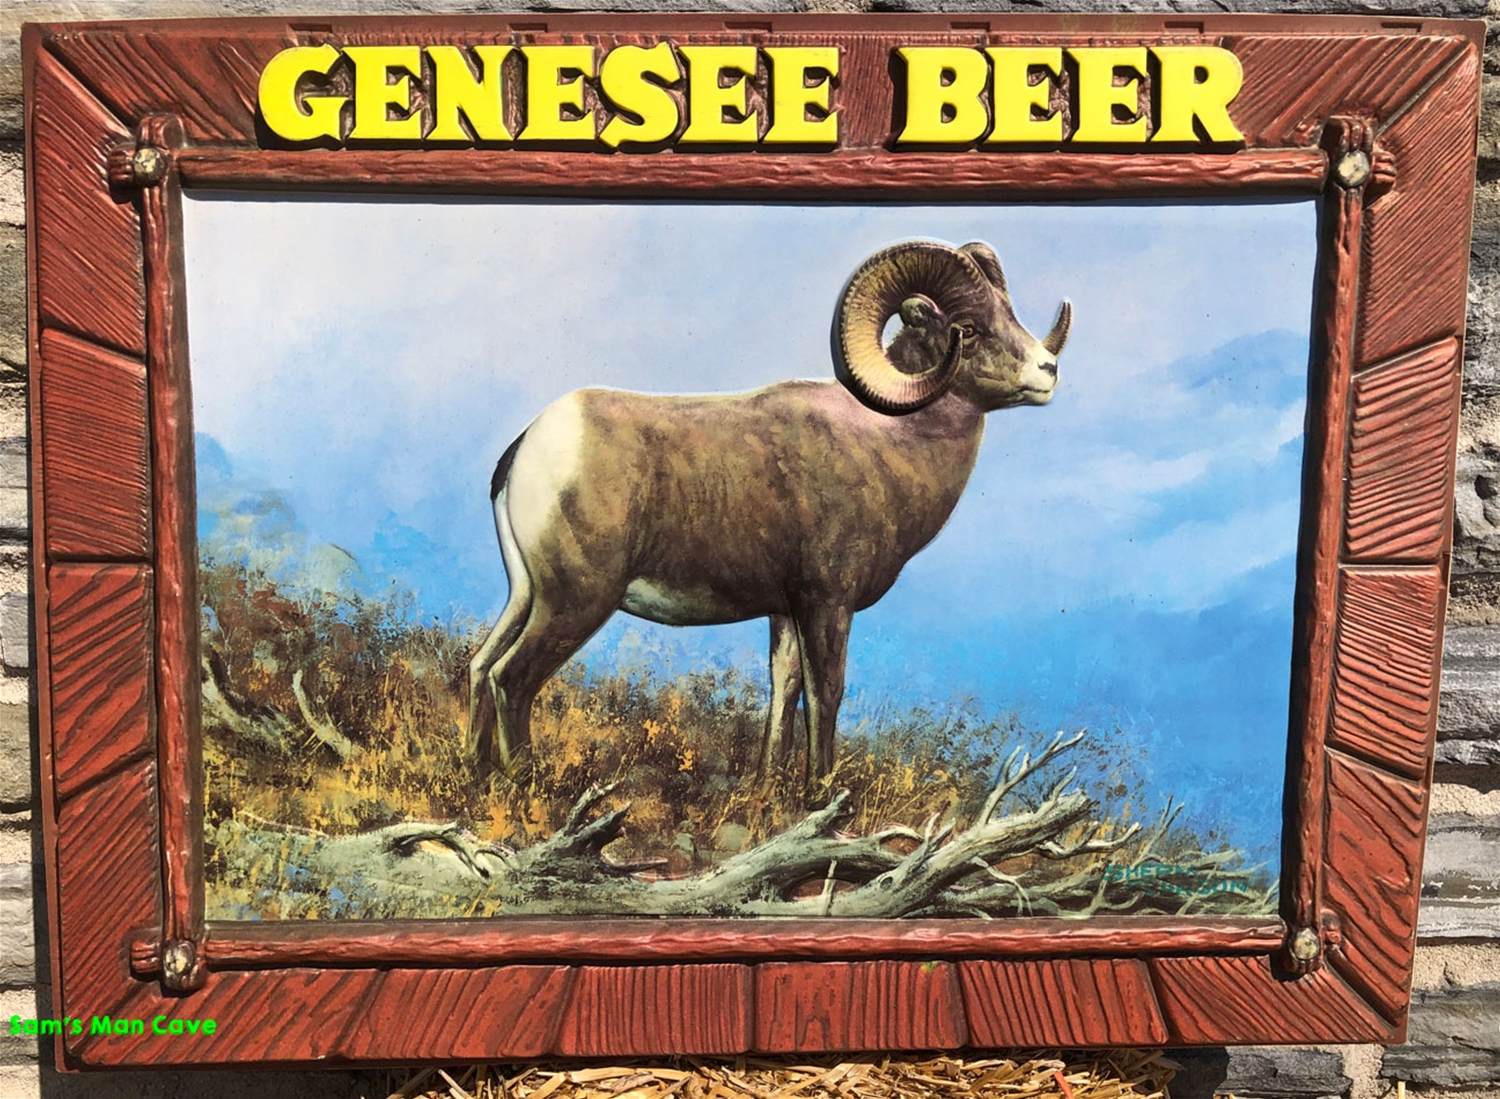 Genesee Beer Plastic Insert Ram Sign